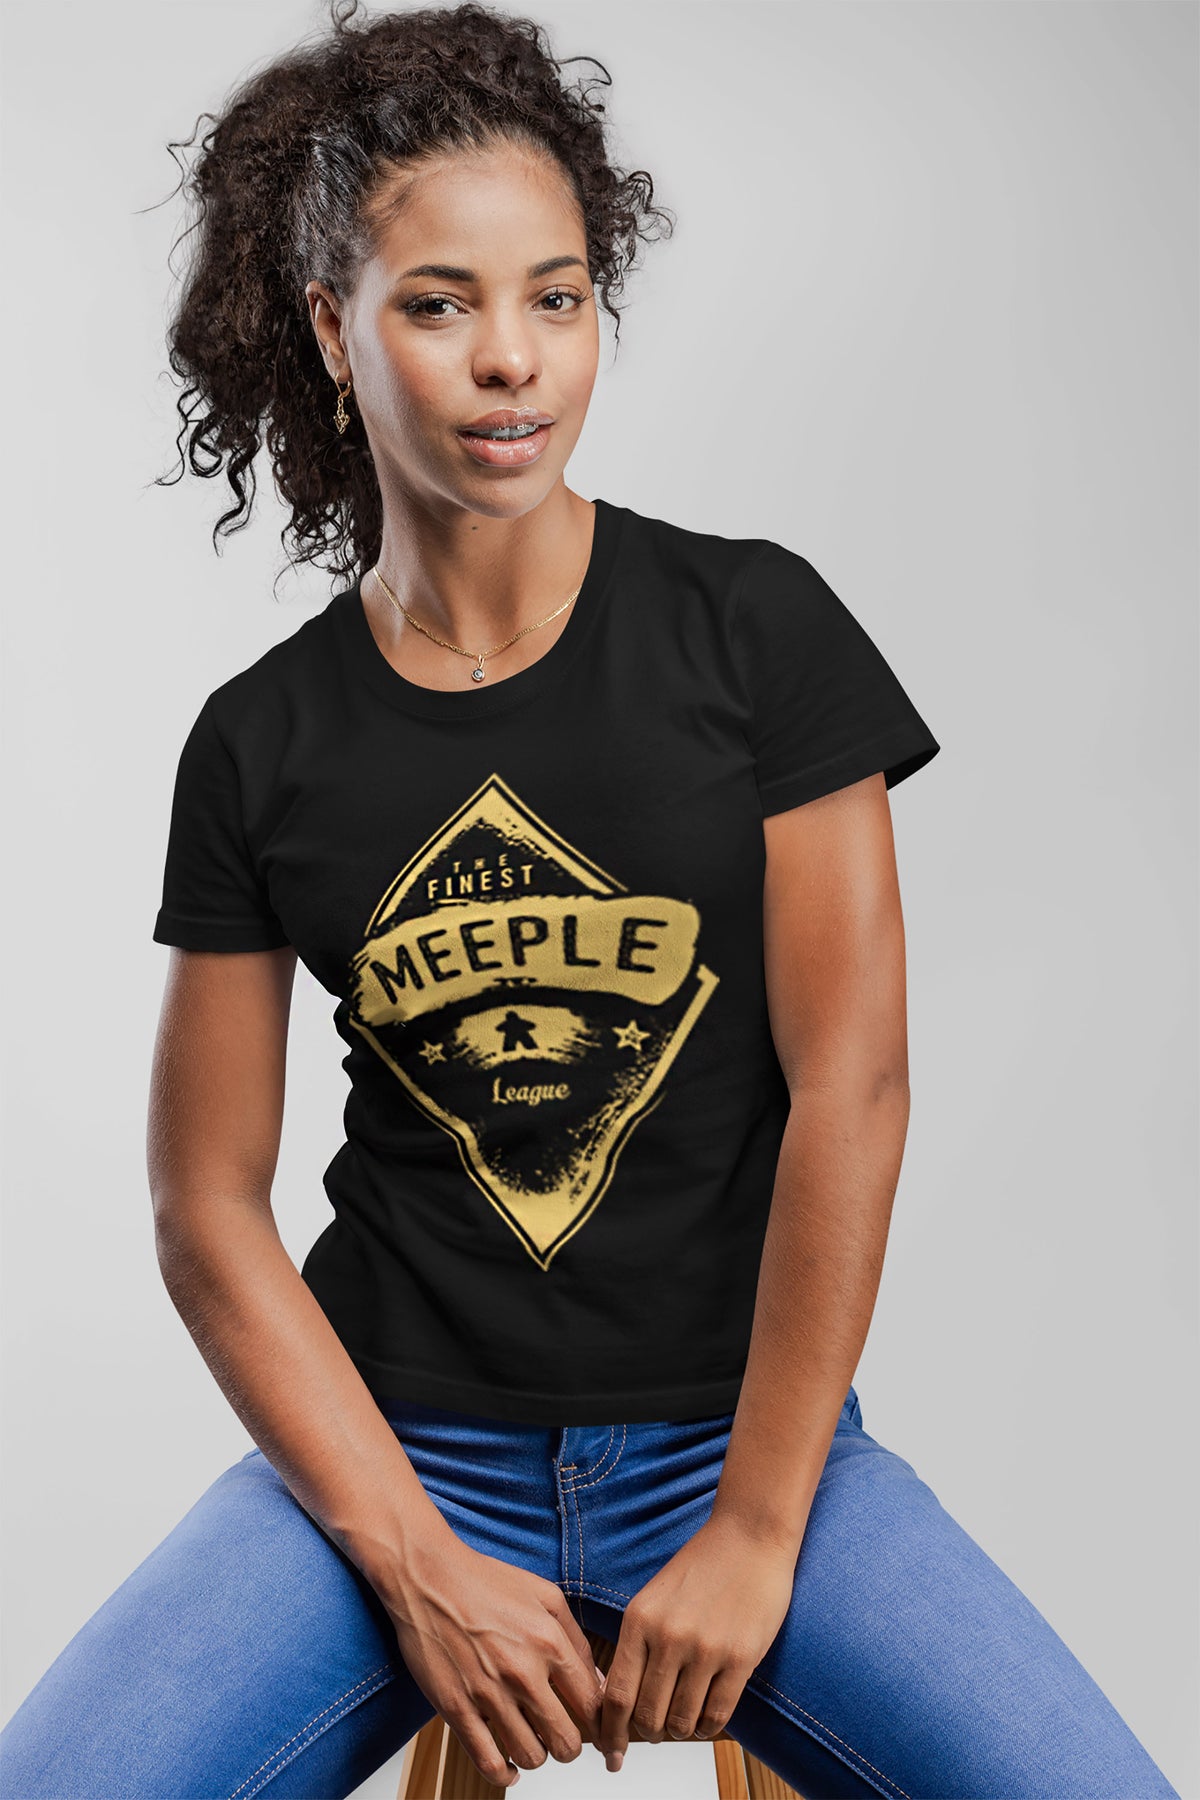 Finest Meeple League Board Game T-Shirt Action Shopt Women&#39;s